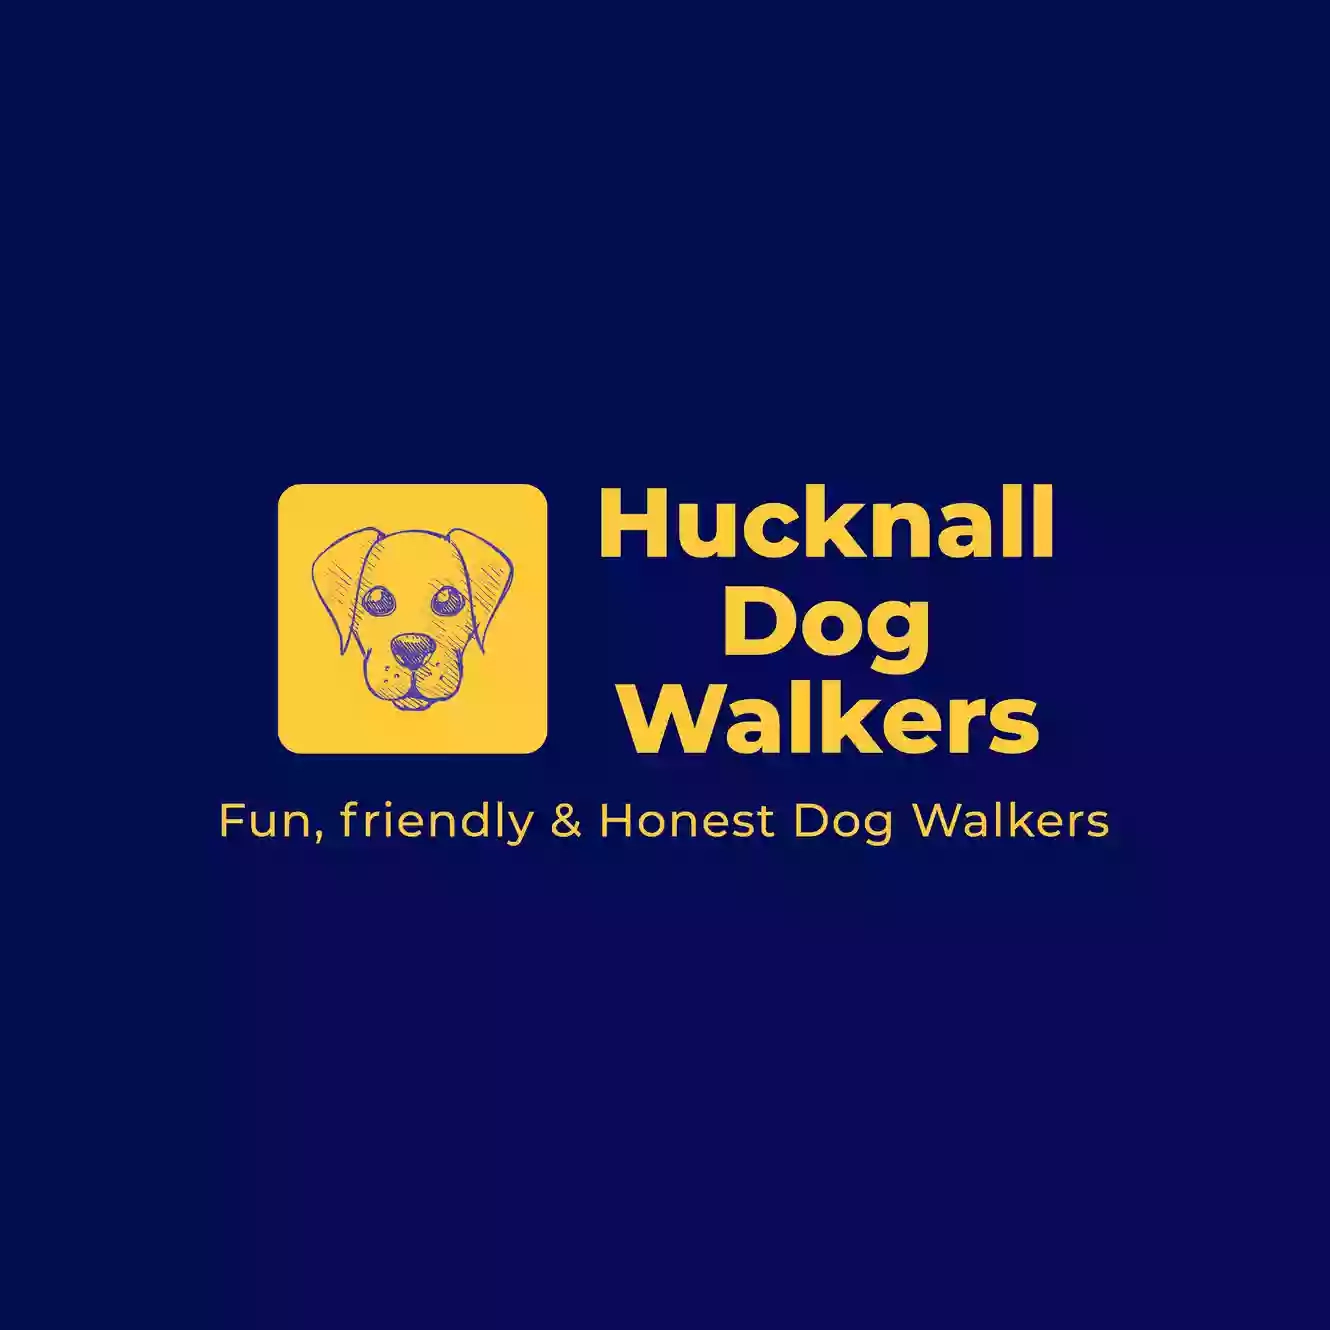 Hucknall Dog Walkers